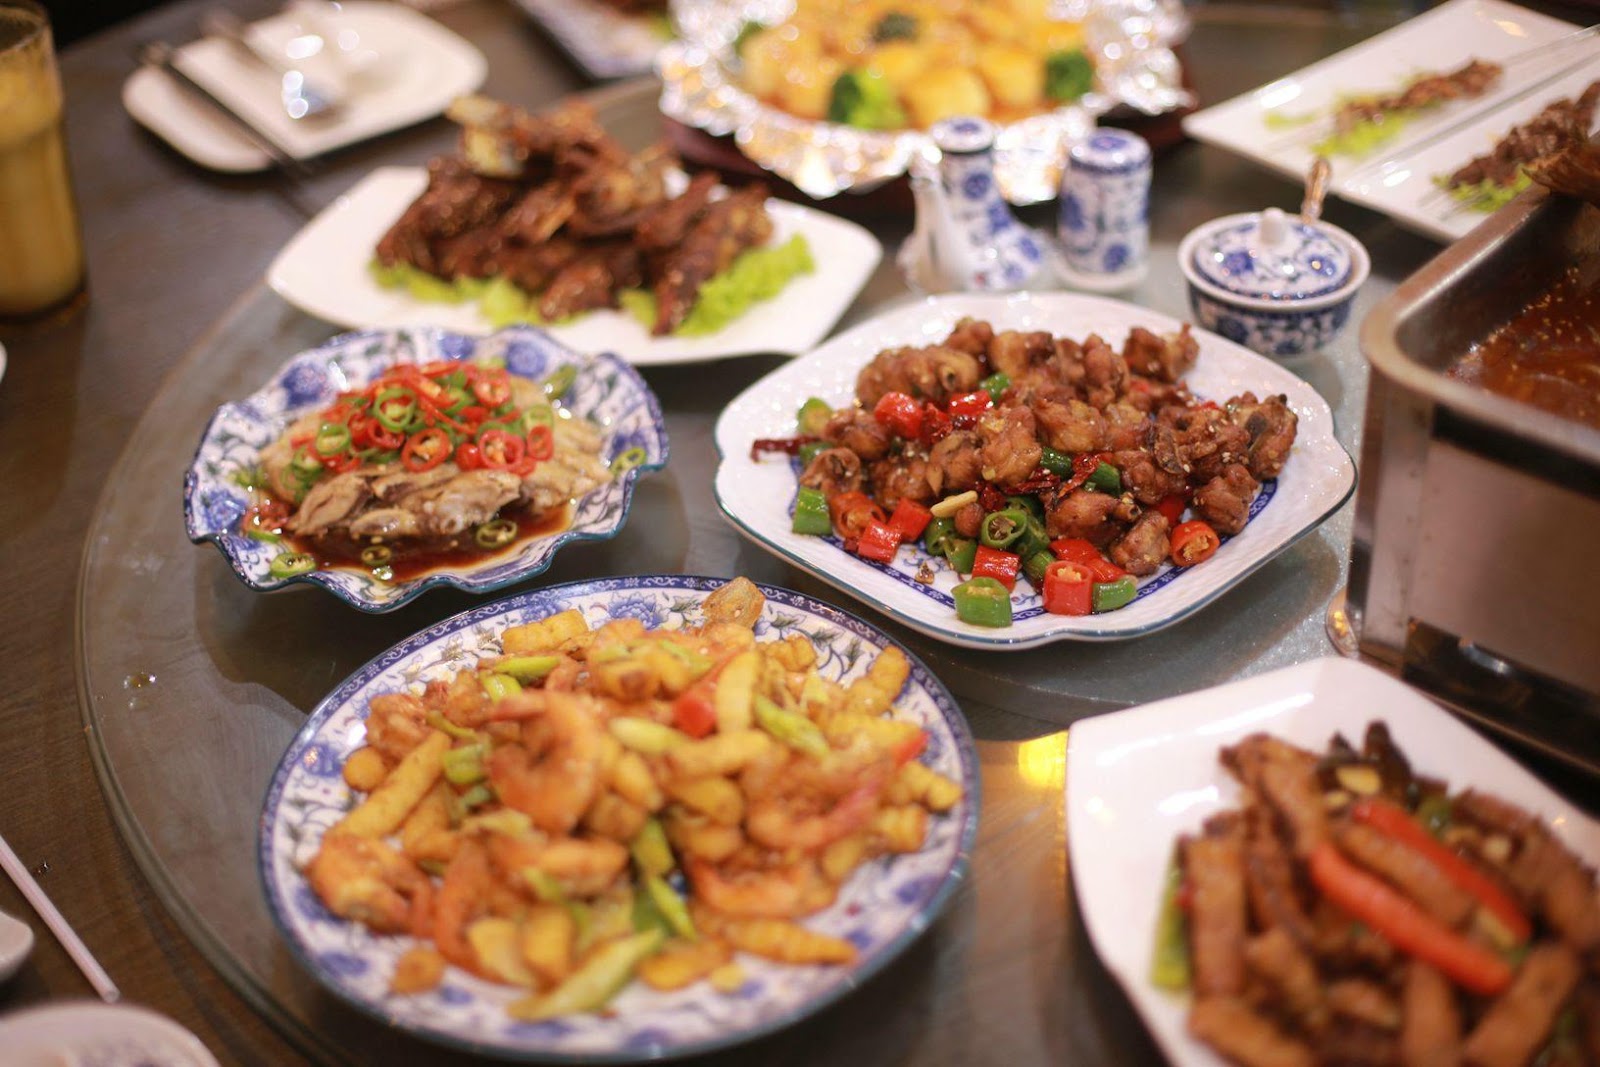 Mengidam nak makan masakan ala Cina? Nah 5 restoran masakan Cina Muslim